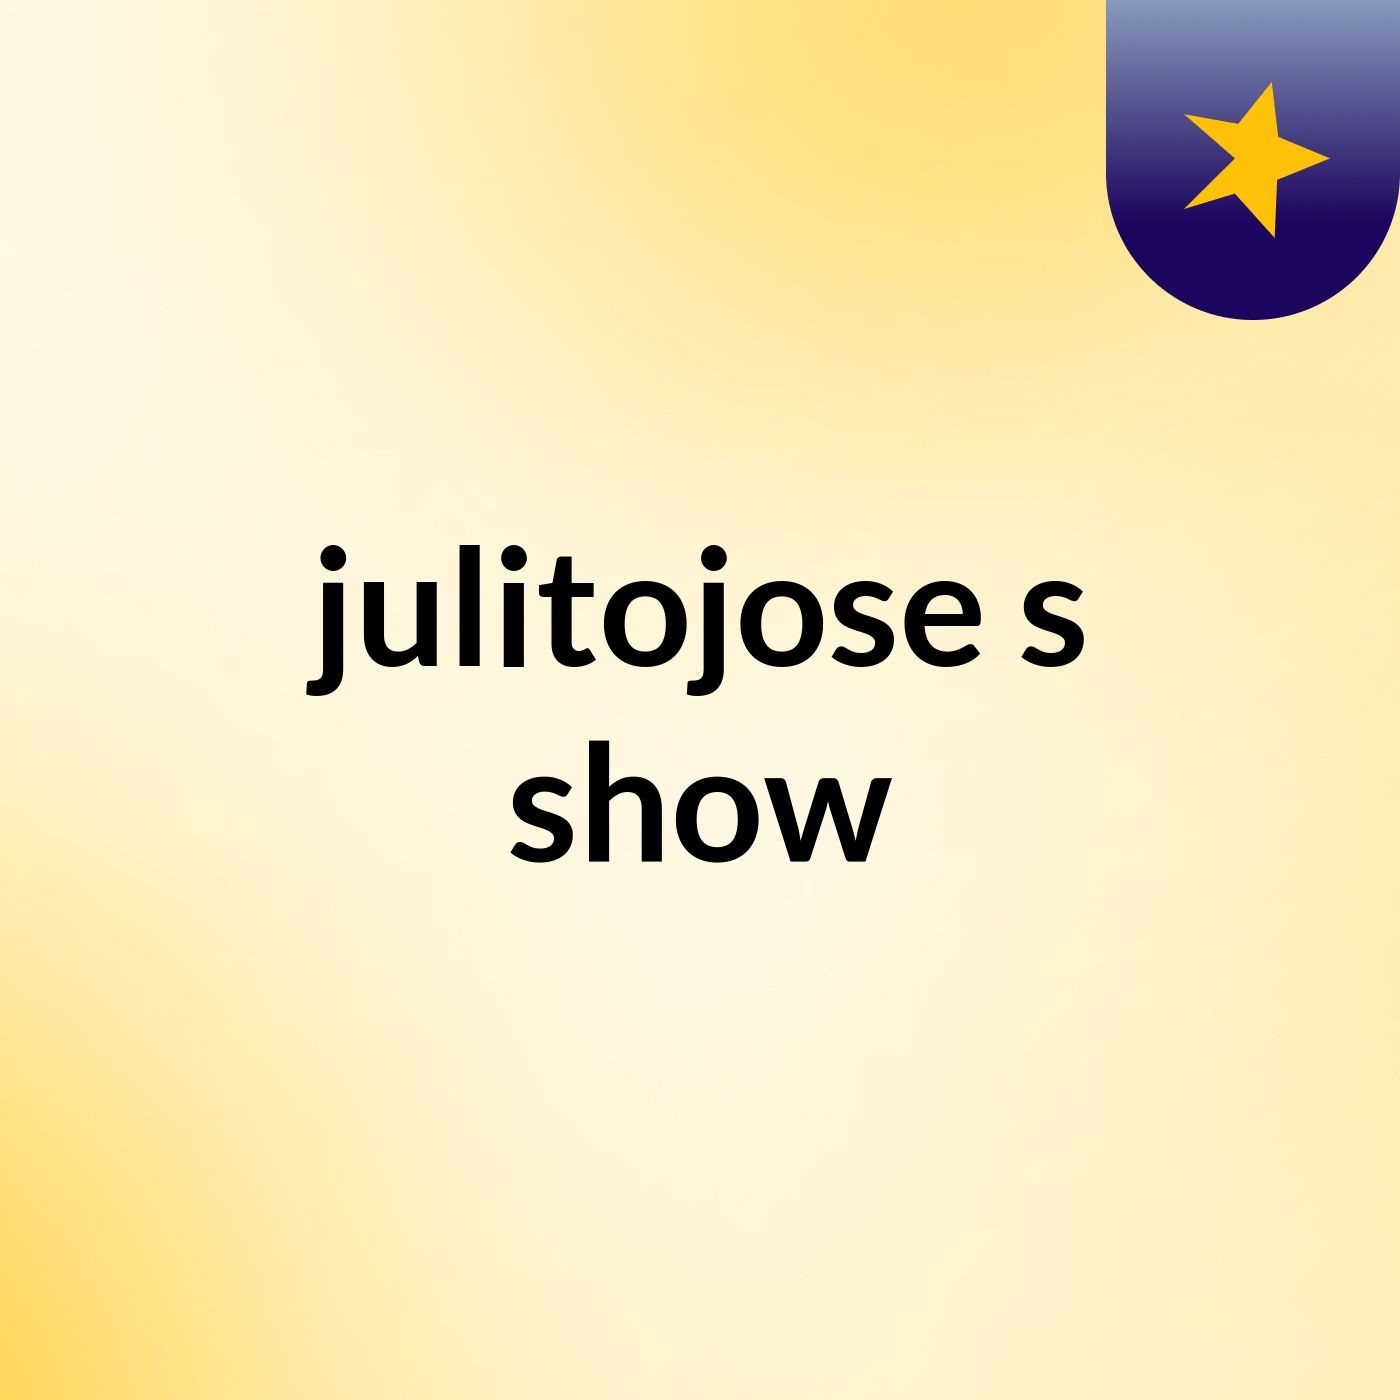 julitojose's show